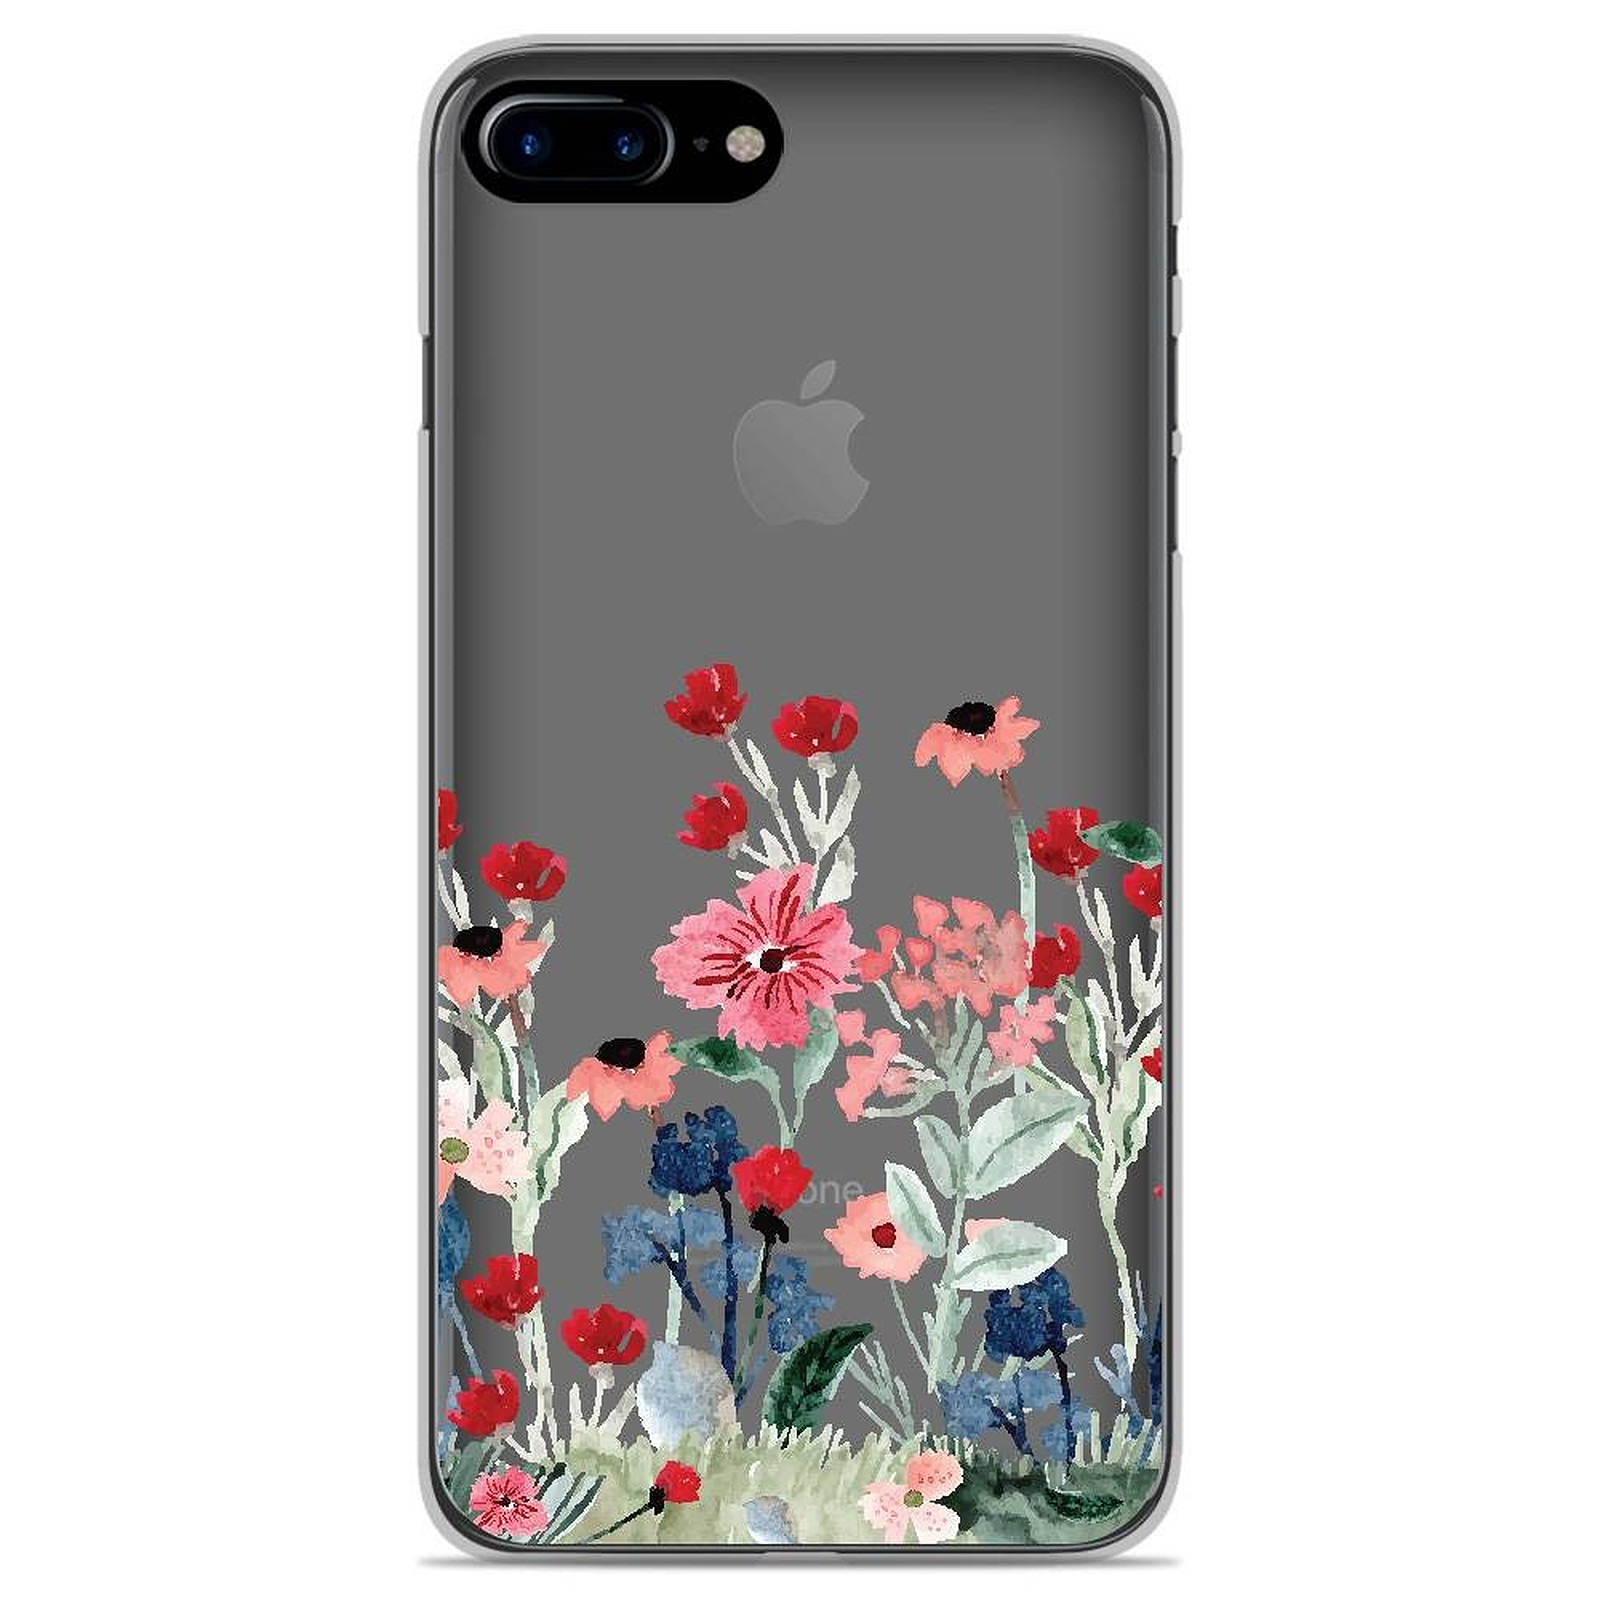 1001 Coques Coque silicone gel Apple iPhone 7 Plus motif Printemps en fleurs - Coque telephone 1001Coques